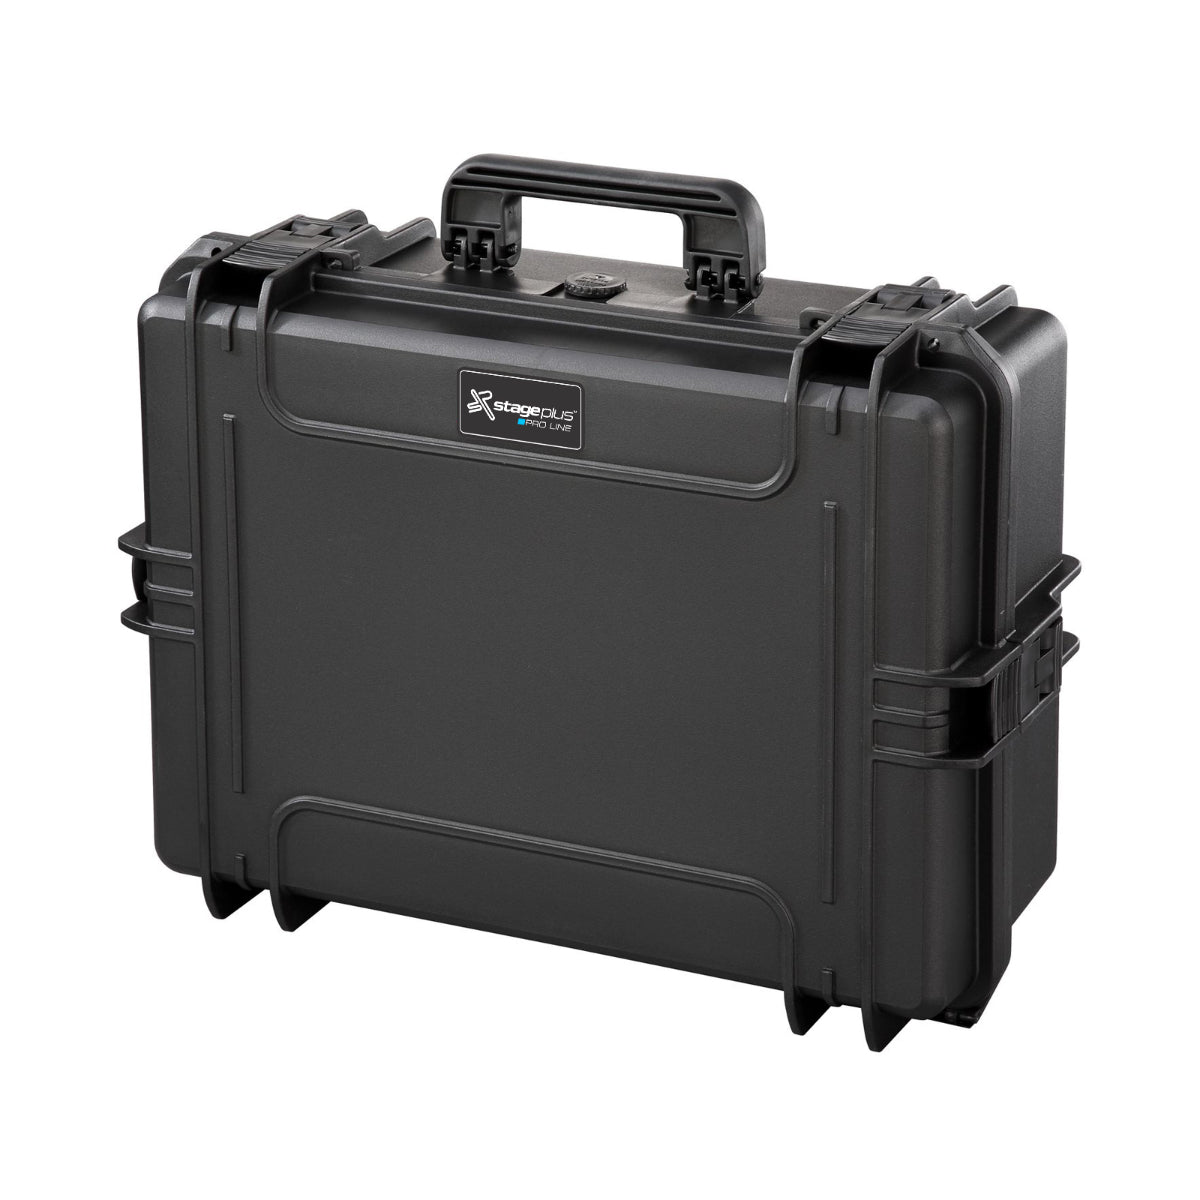 SP PRO 505S Black Carry Case, Cubed Foam, ID: L500xW350xH194mm